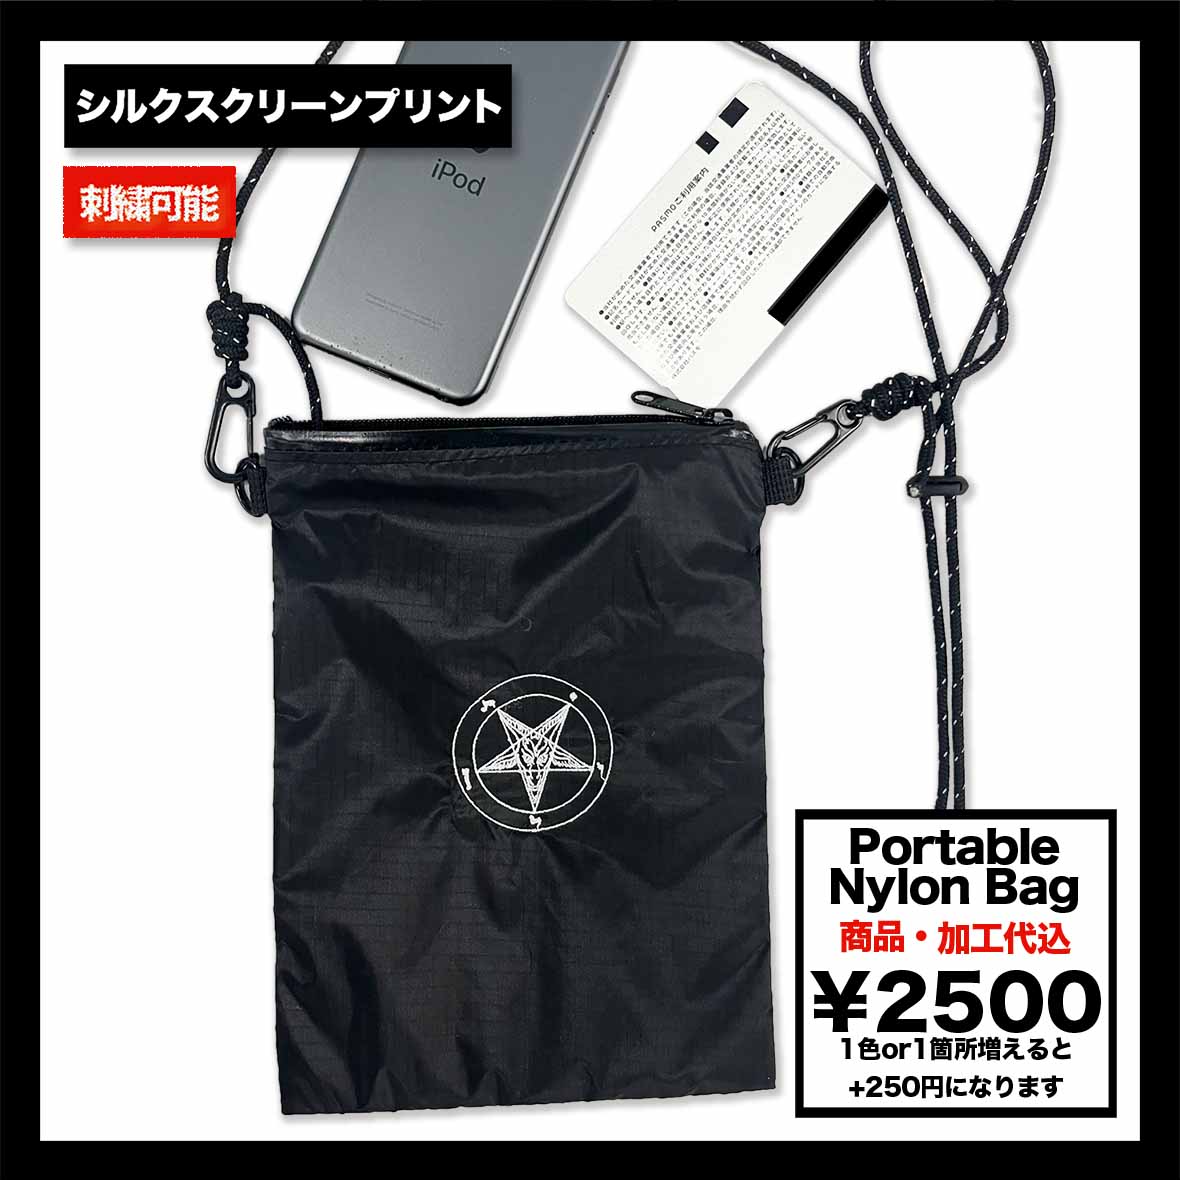 Portable Nylon Bag (品番CPSEW003)